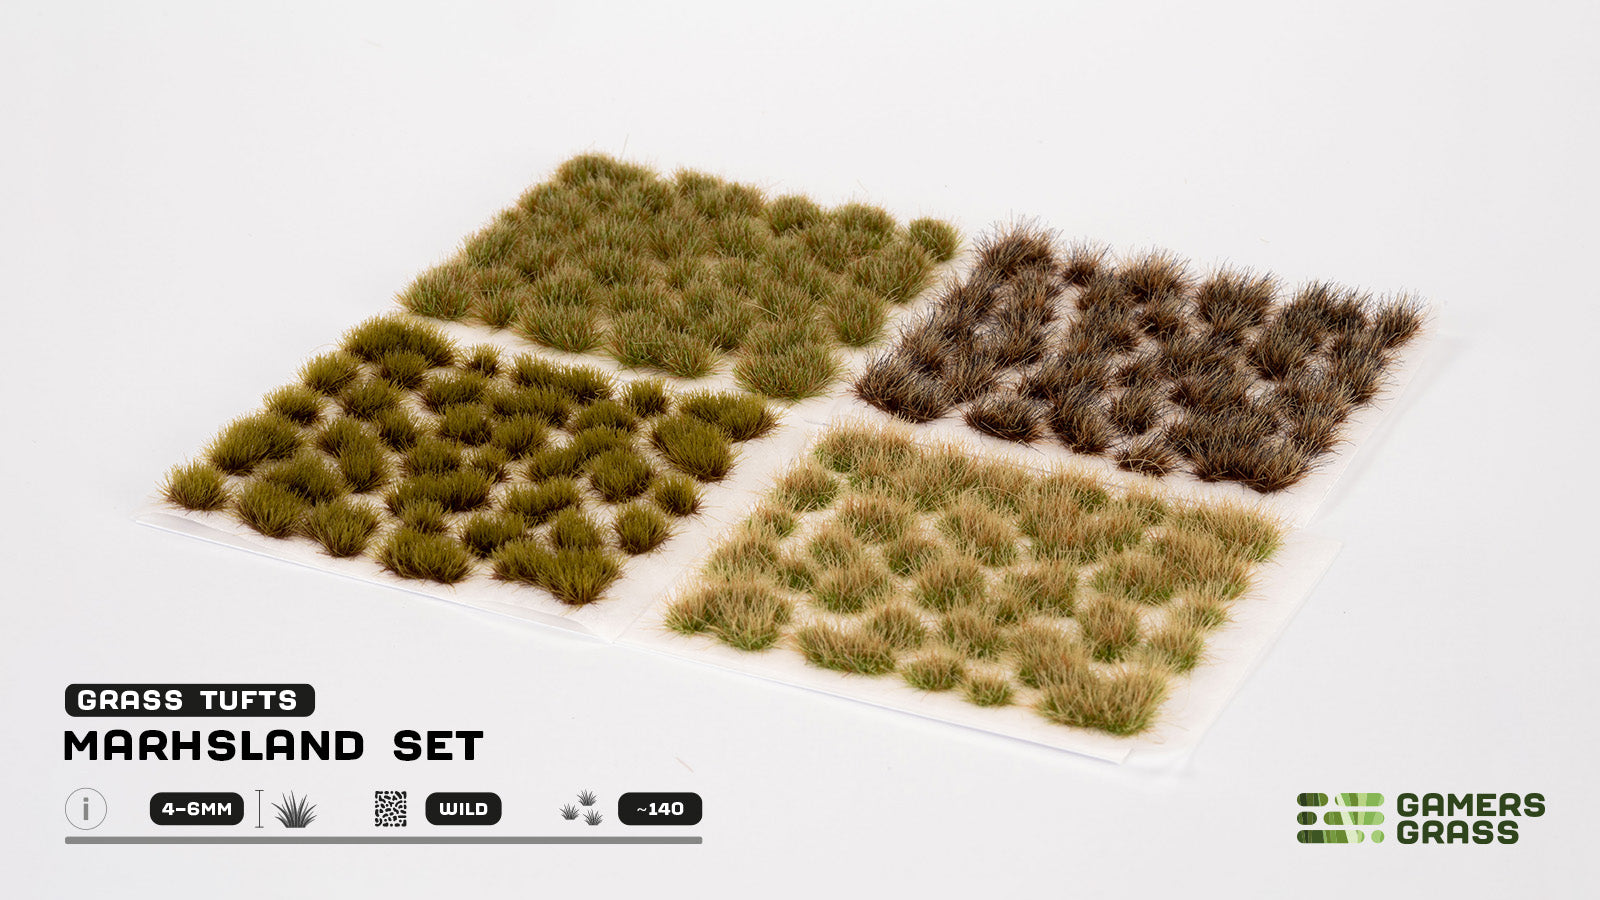 GamersGrass Grass Tufts: Marshland Set 4-6mm - Wild | Gauntlet Hobbies - Angola